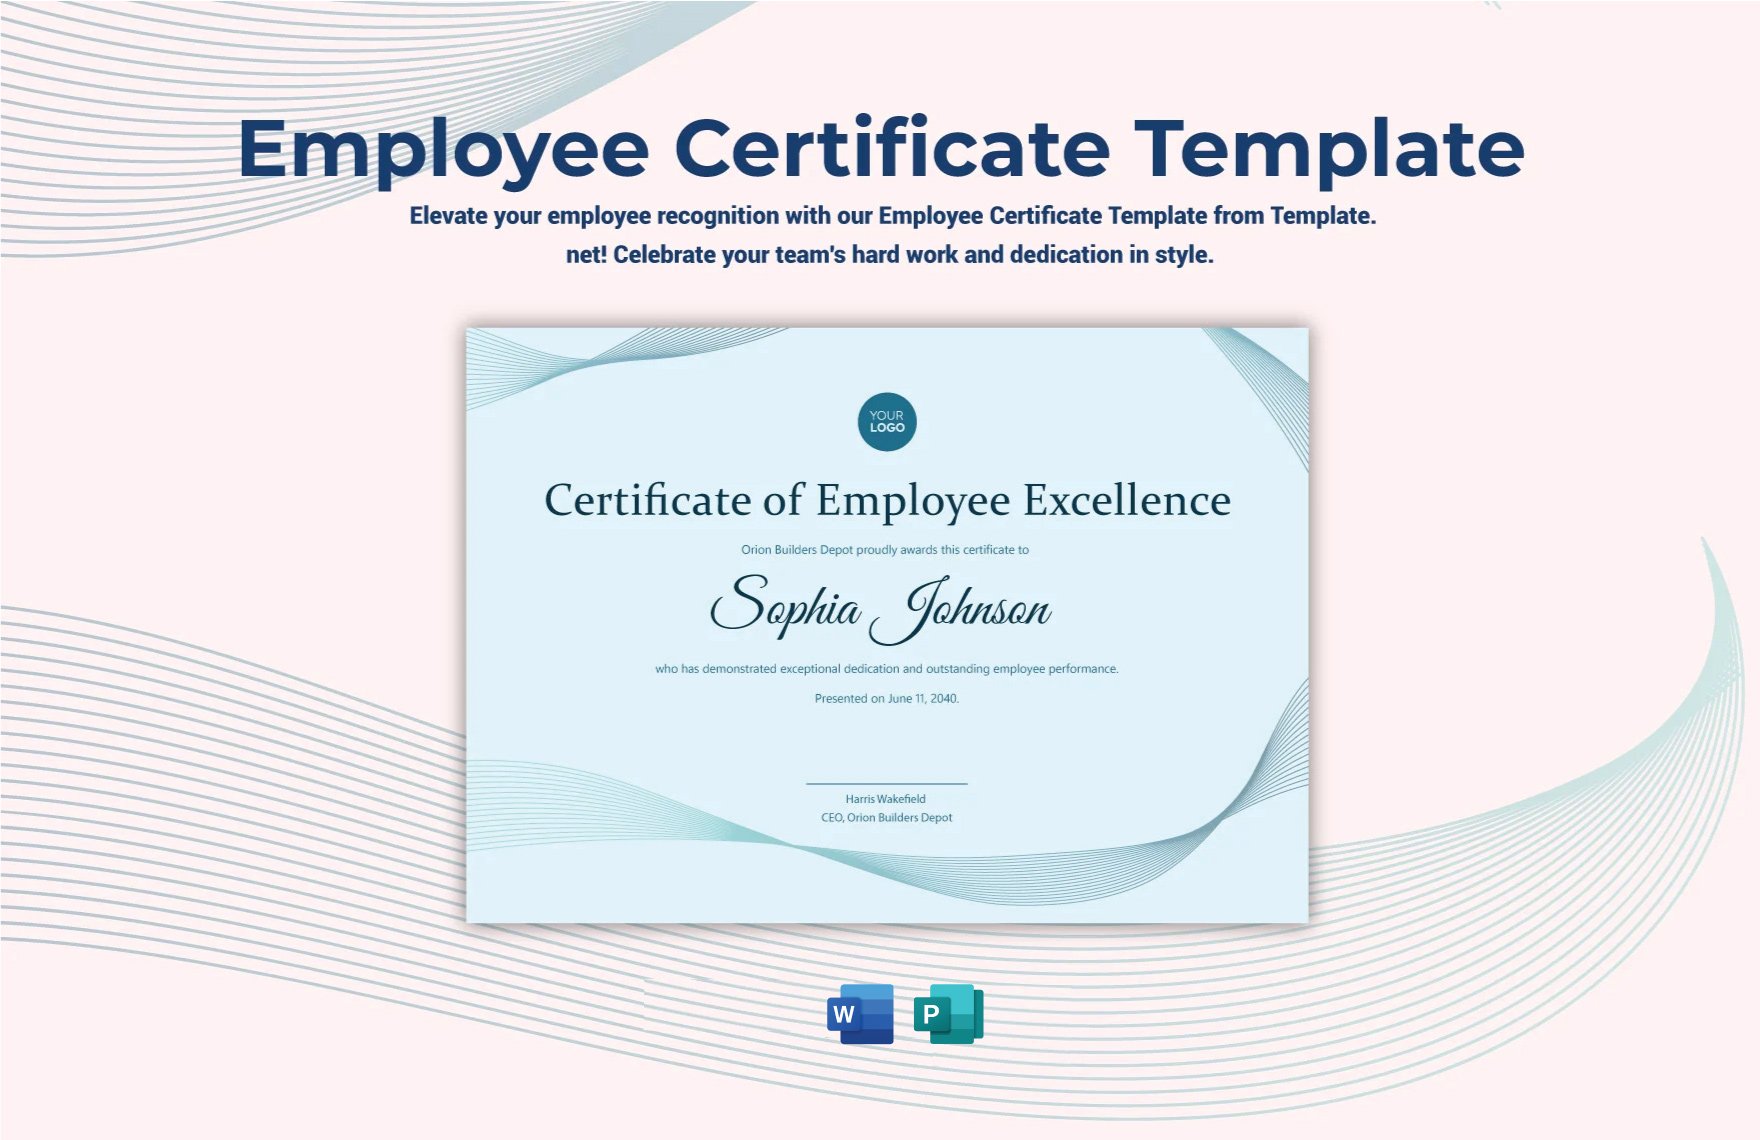 Employee Certificate Template